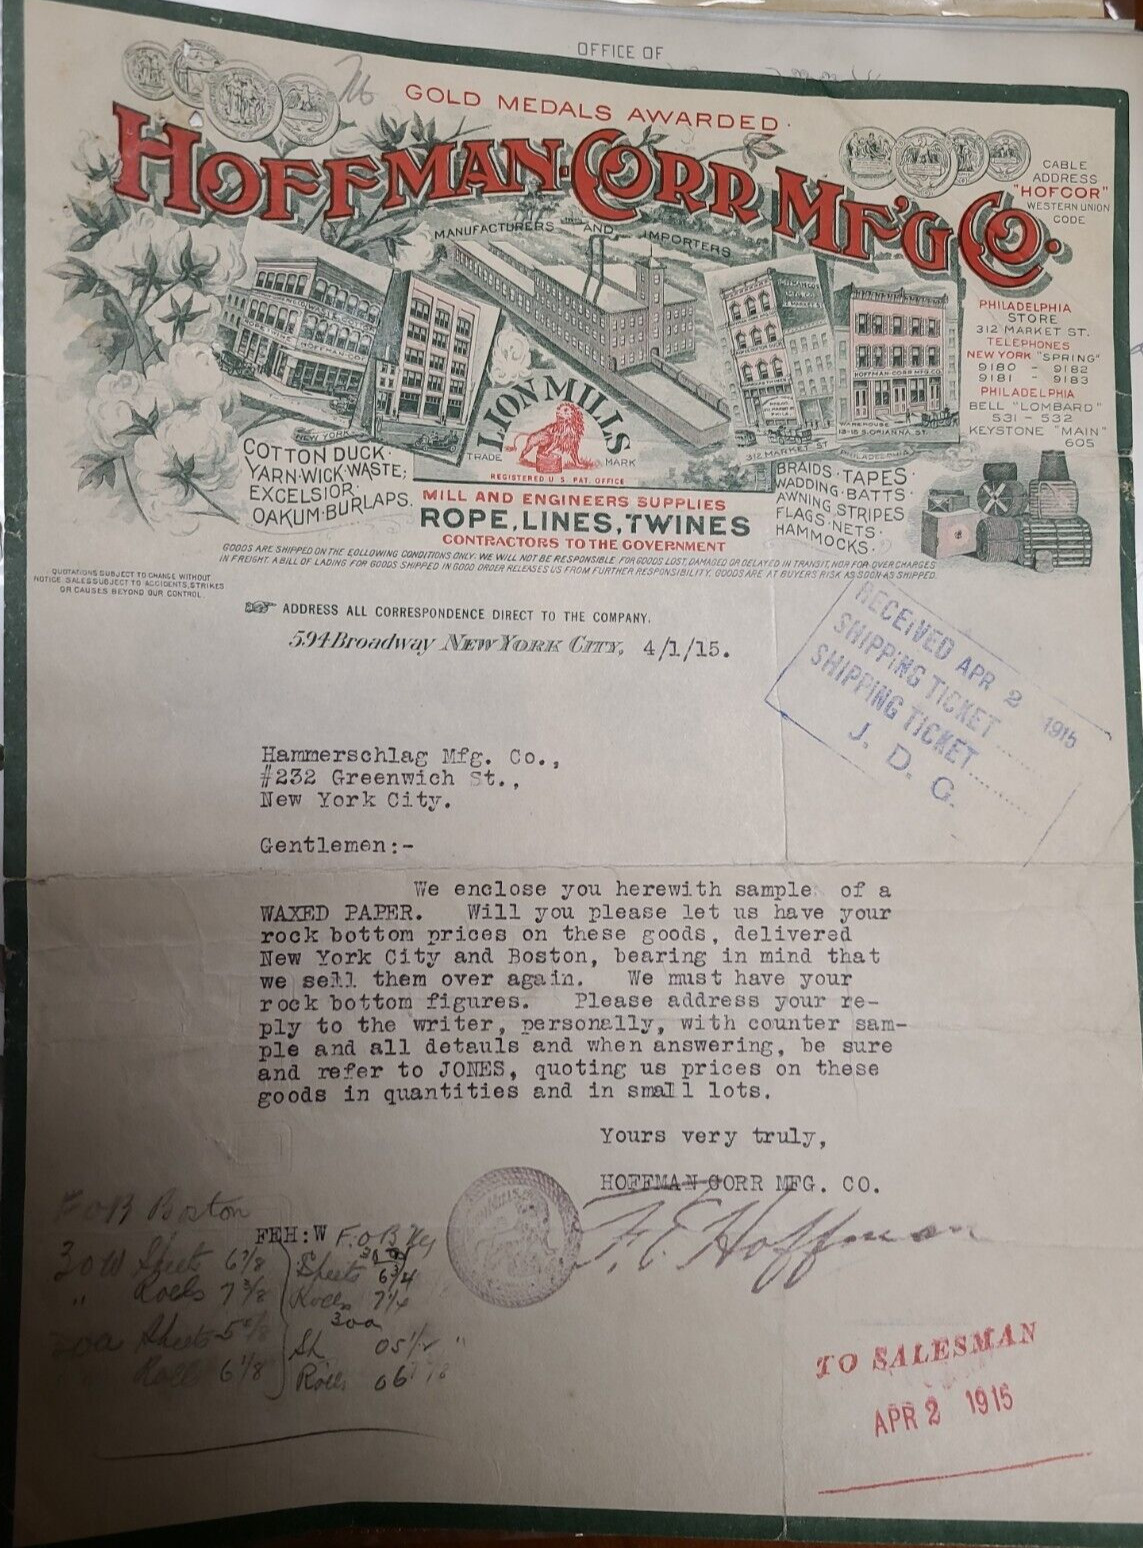 1915 Antique Document, Hoffman-Corr Co., Lion Mills, Broadway NYC, Signature  *5